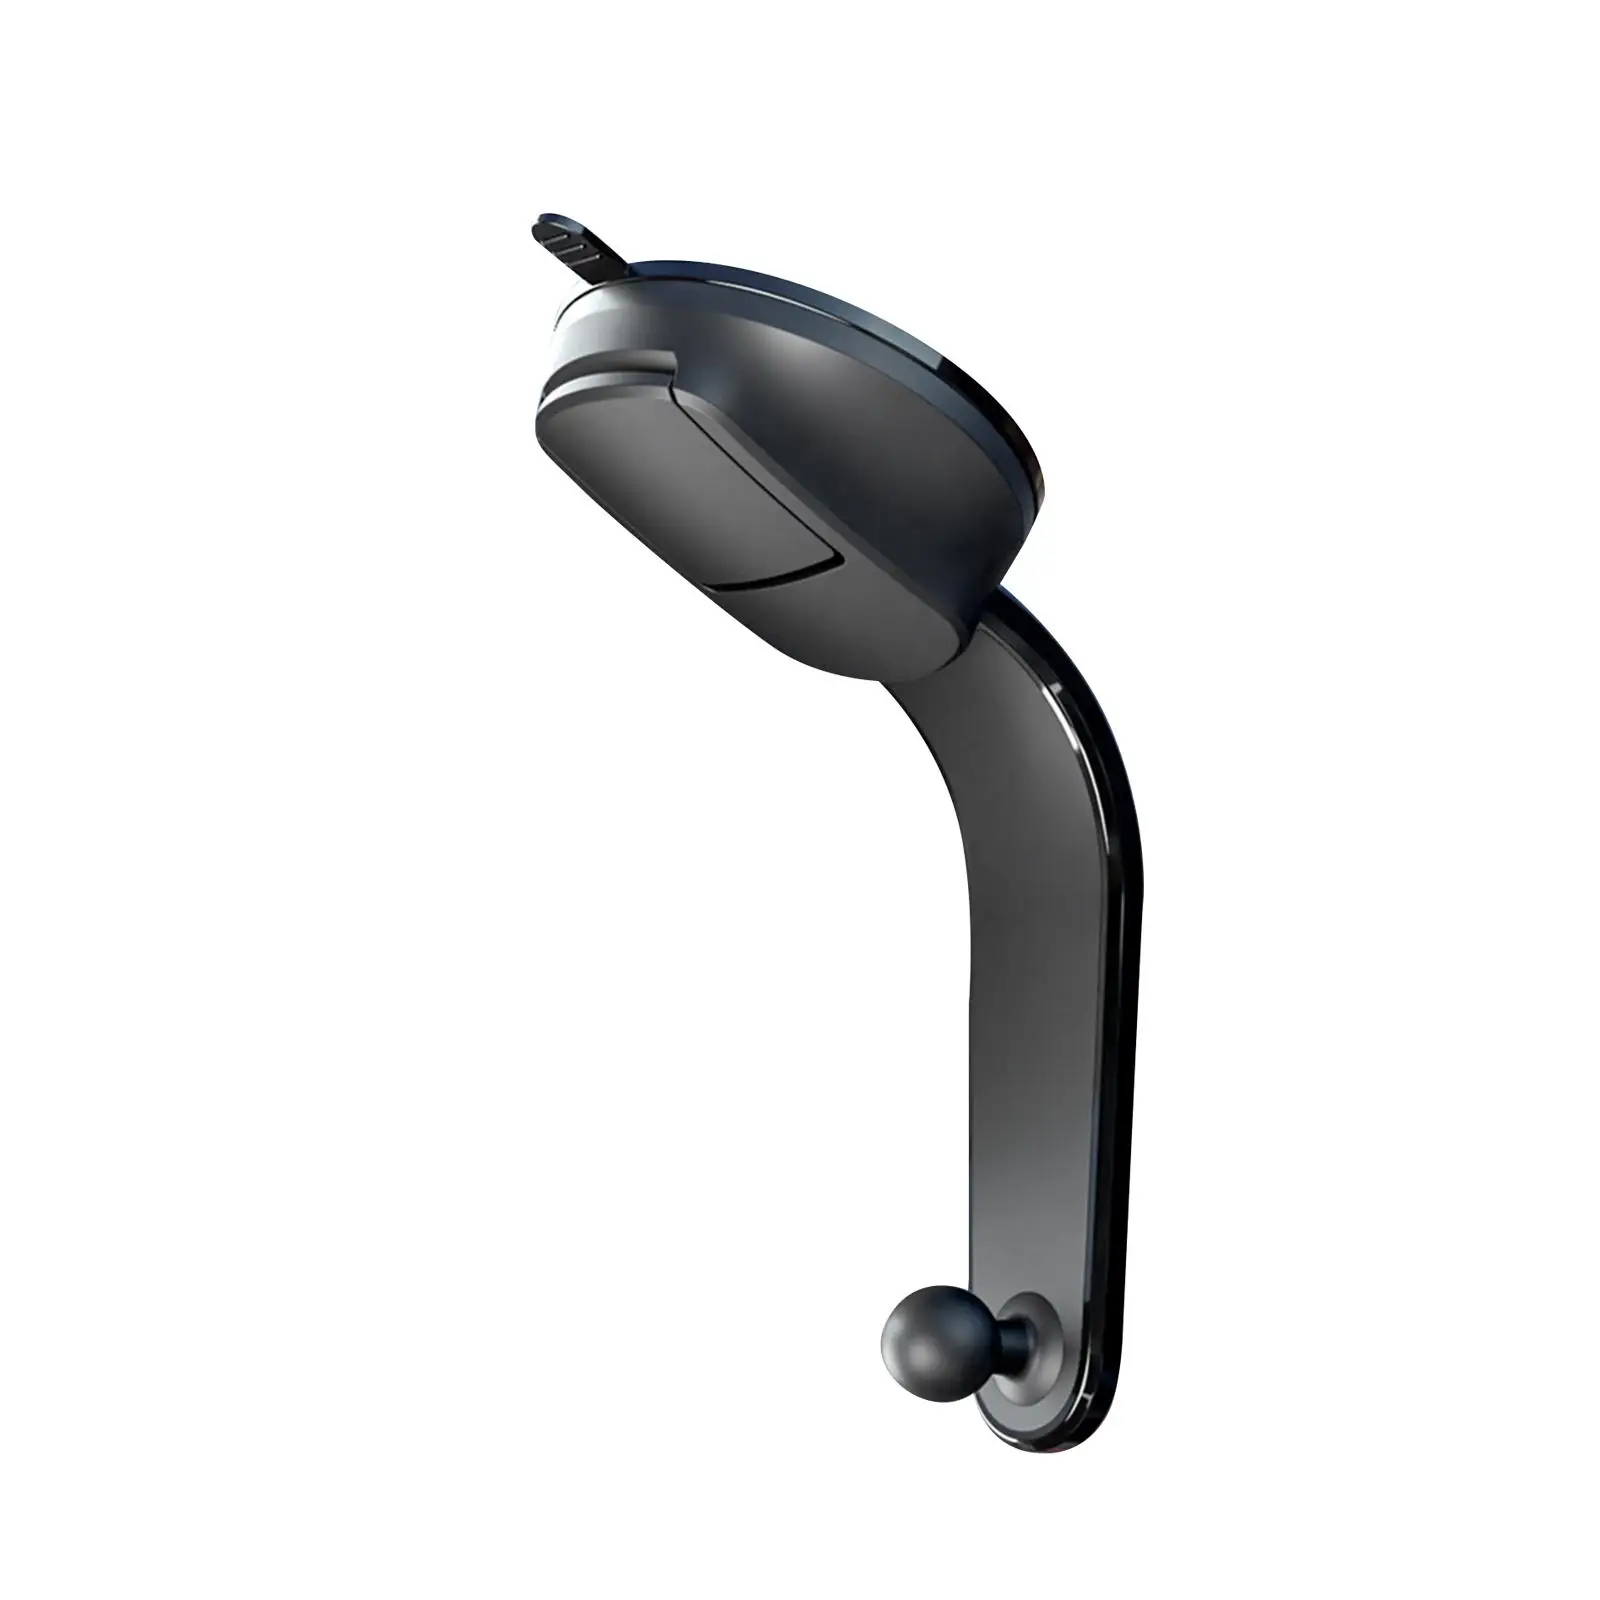 Car Phone Holder Heavy Load Reusable Universal Dashboard Car Phone Holder 17mm Ball Sticky Mount Holder for Dashboard Vent